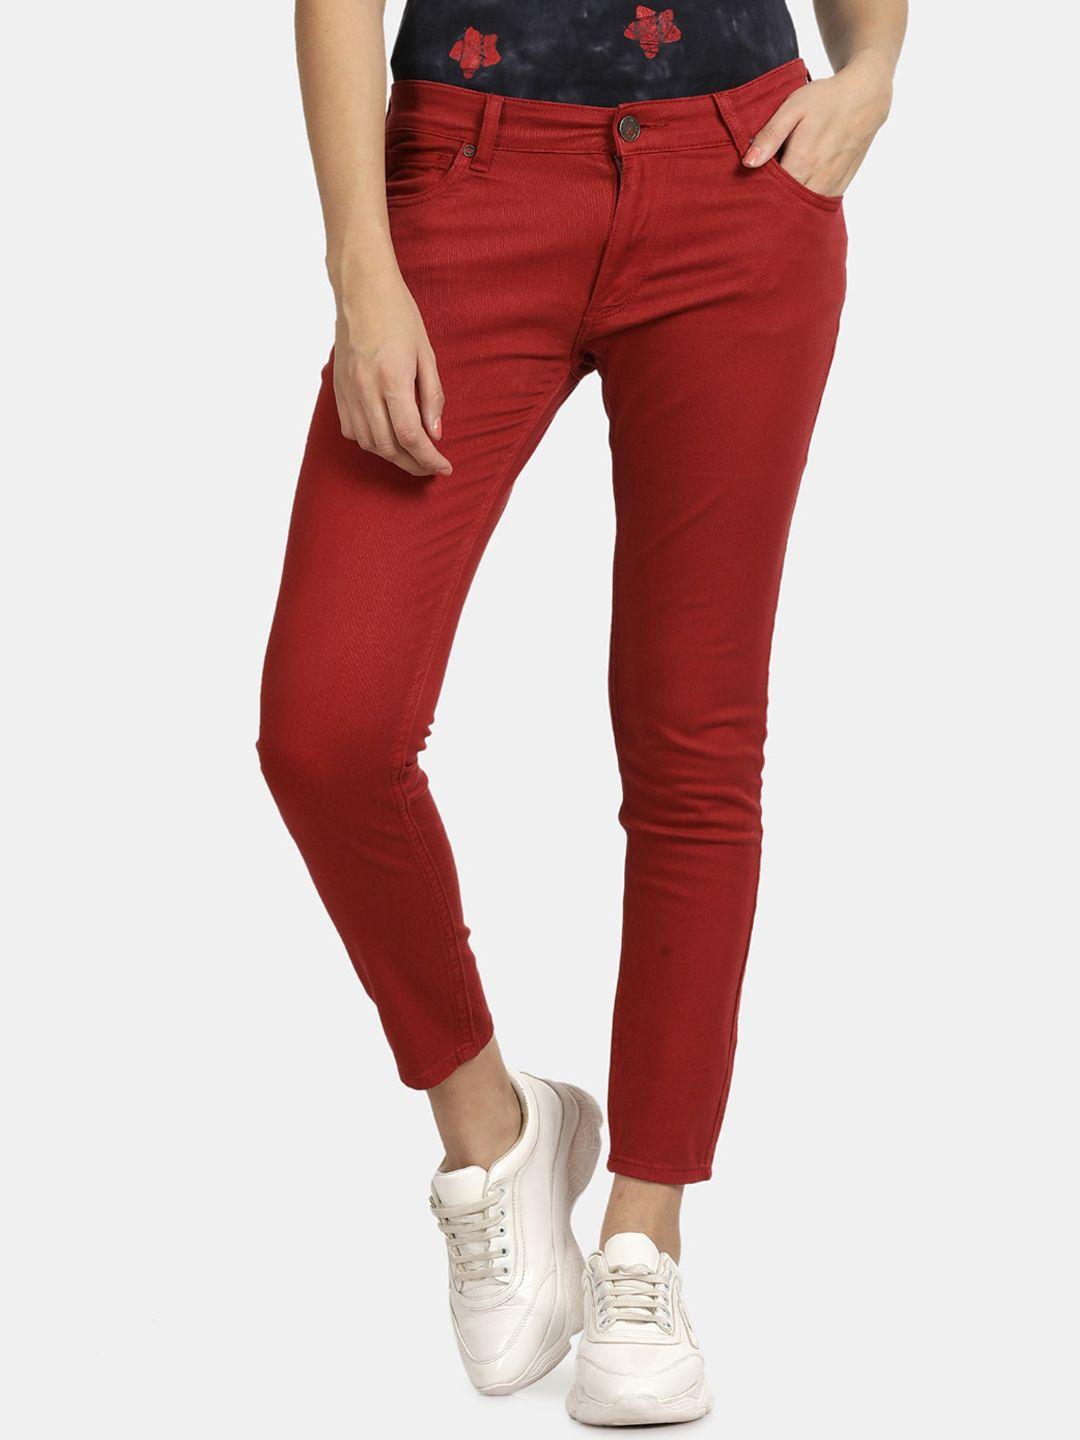 llak jeans women skinny fit mid-rise stretchable cotton jeans